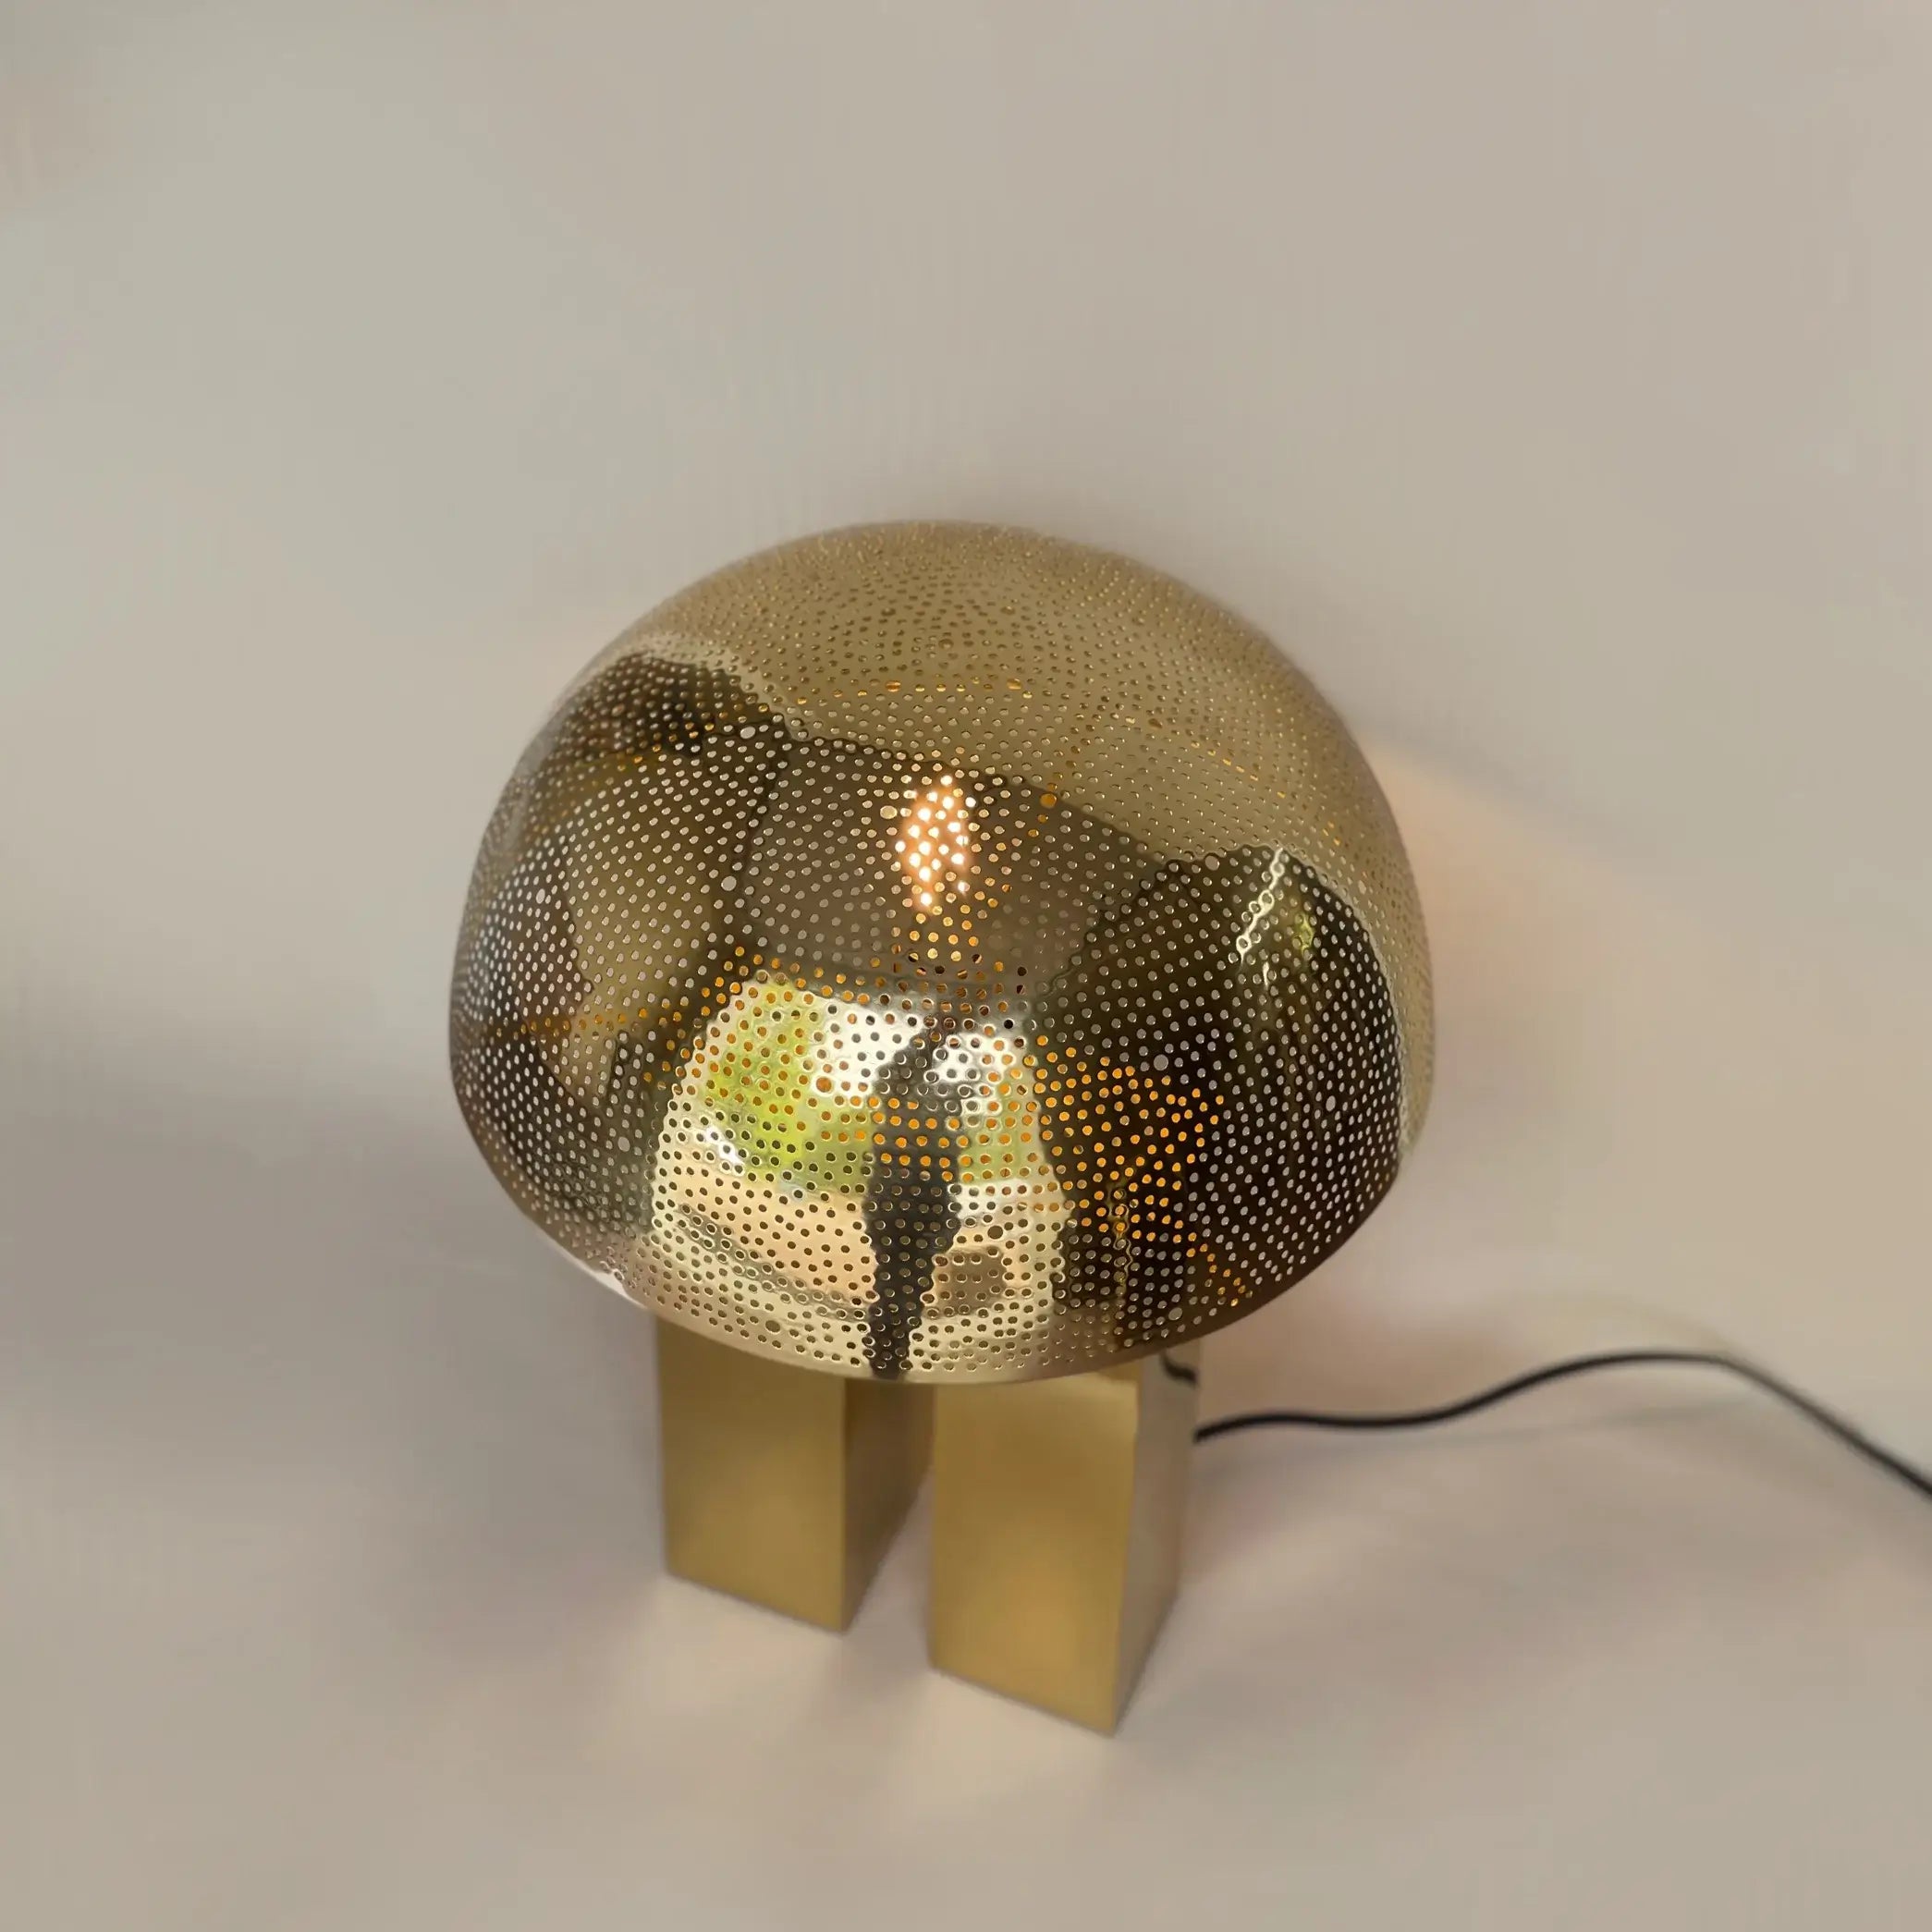 Dounia home Mushroom Table lamp polished brass metal  made of Metal, Model: Amur